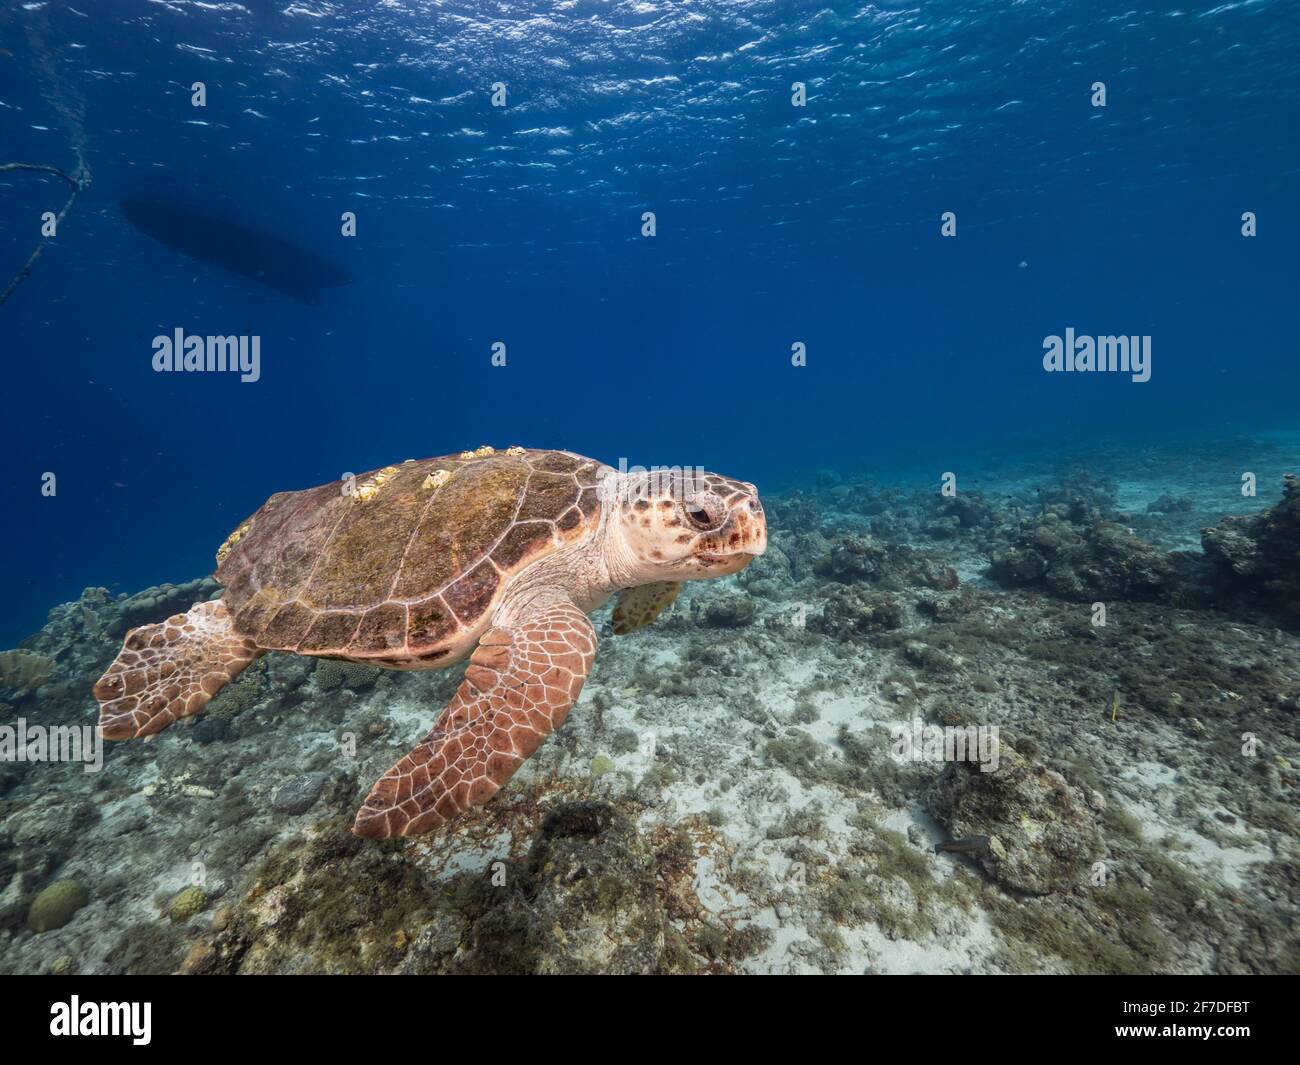 Loggerhead Sea Turtle in coral reef of Caribbean Sea, Curacao Stock Photo